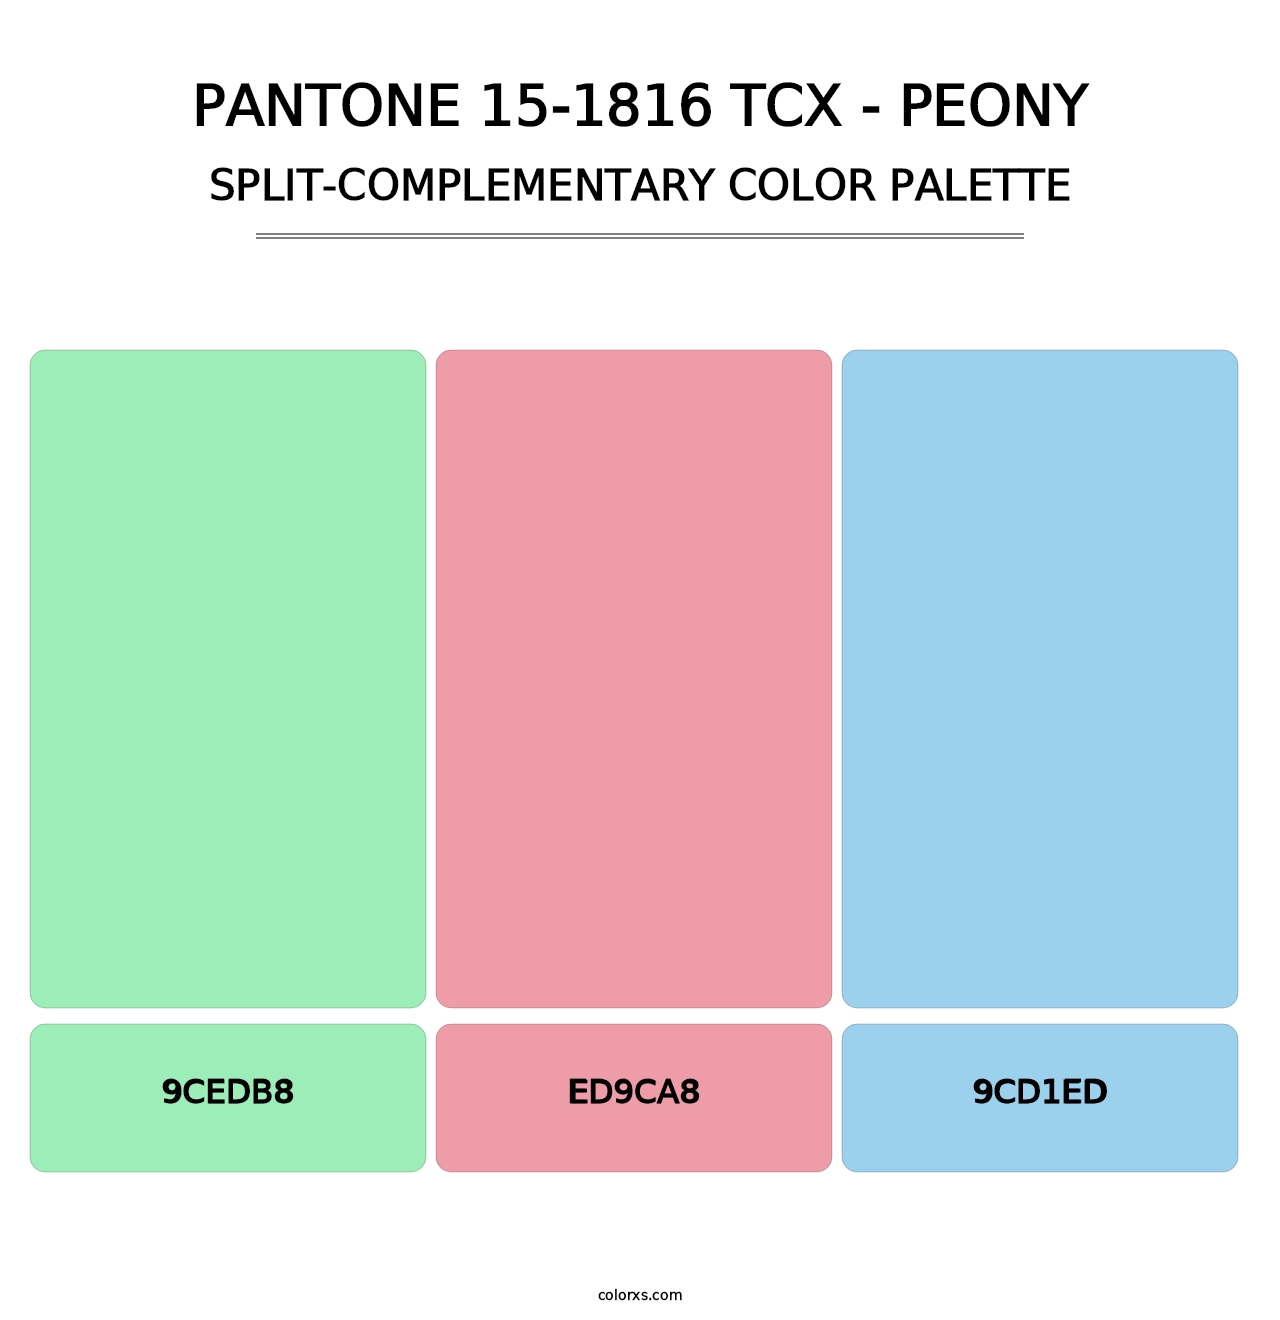 PANTONE 15-1816 TCX - Peony - Split-Complementary Color Palette